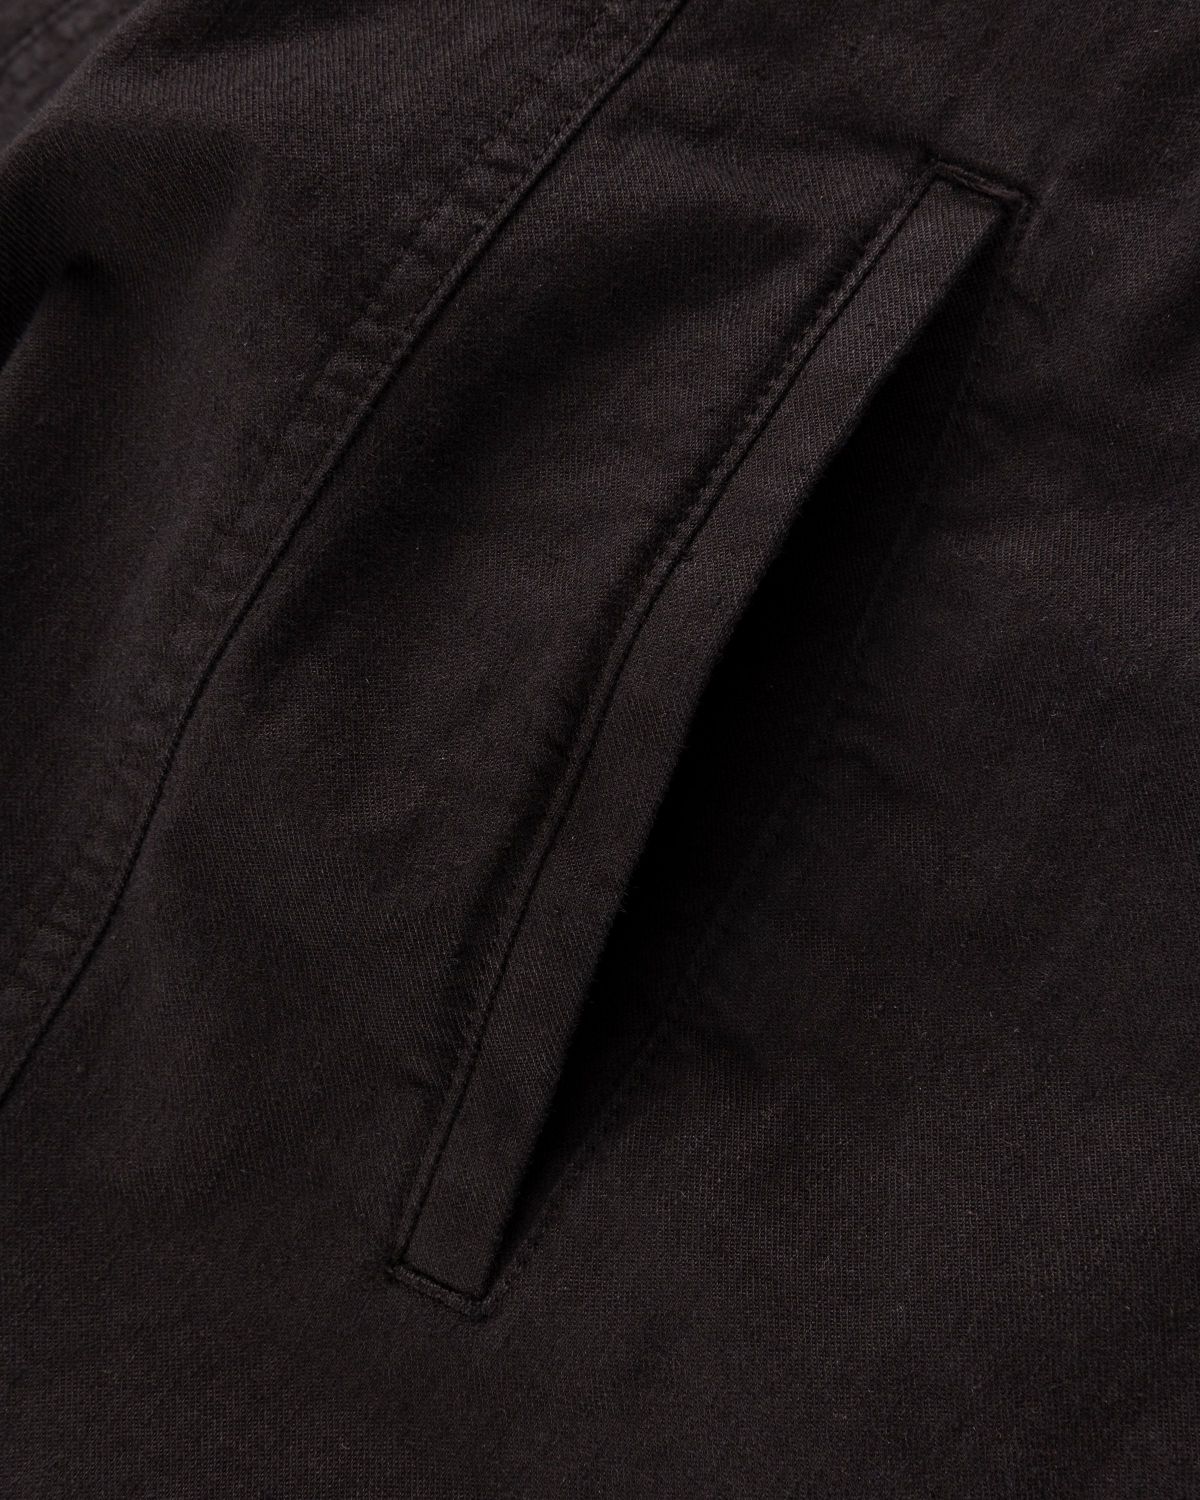 Winnie New York – Linen Cargo Shorts Black - Shorts - Black - Image 6